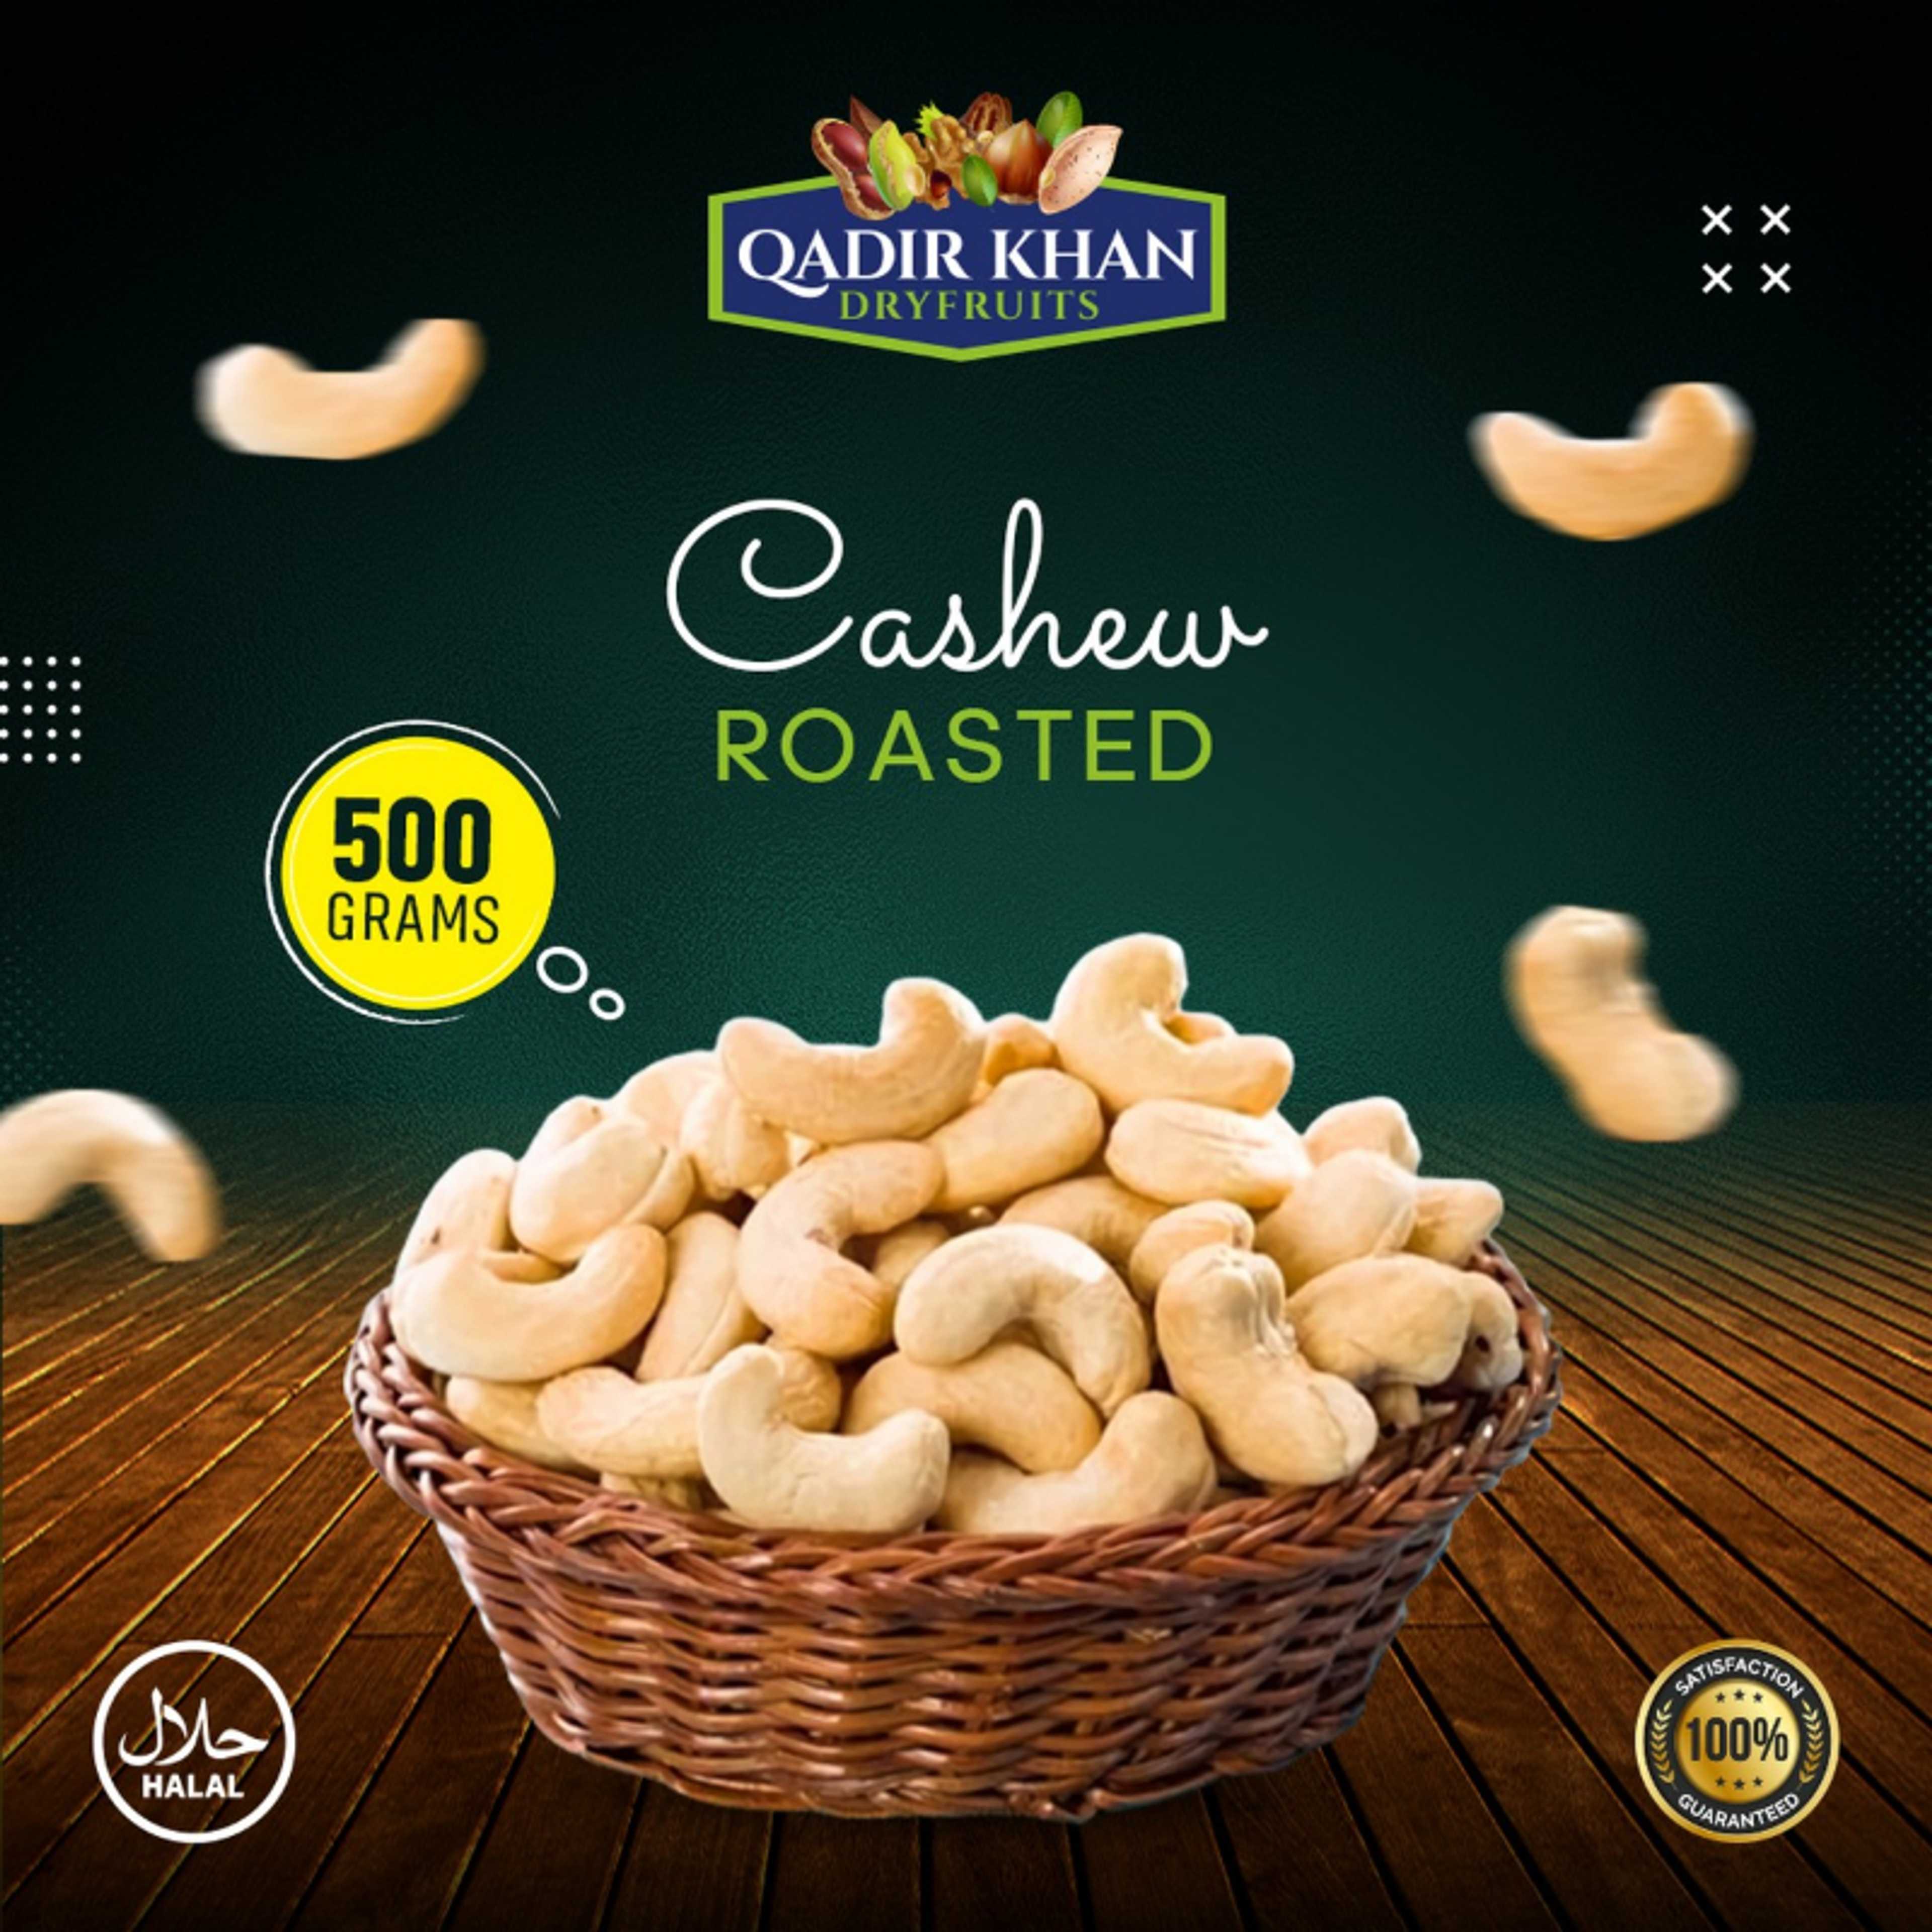 cashow nuts 240 size 500gm- 100% fresh quality